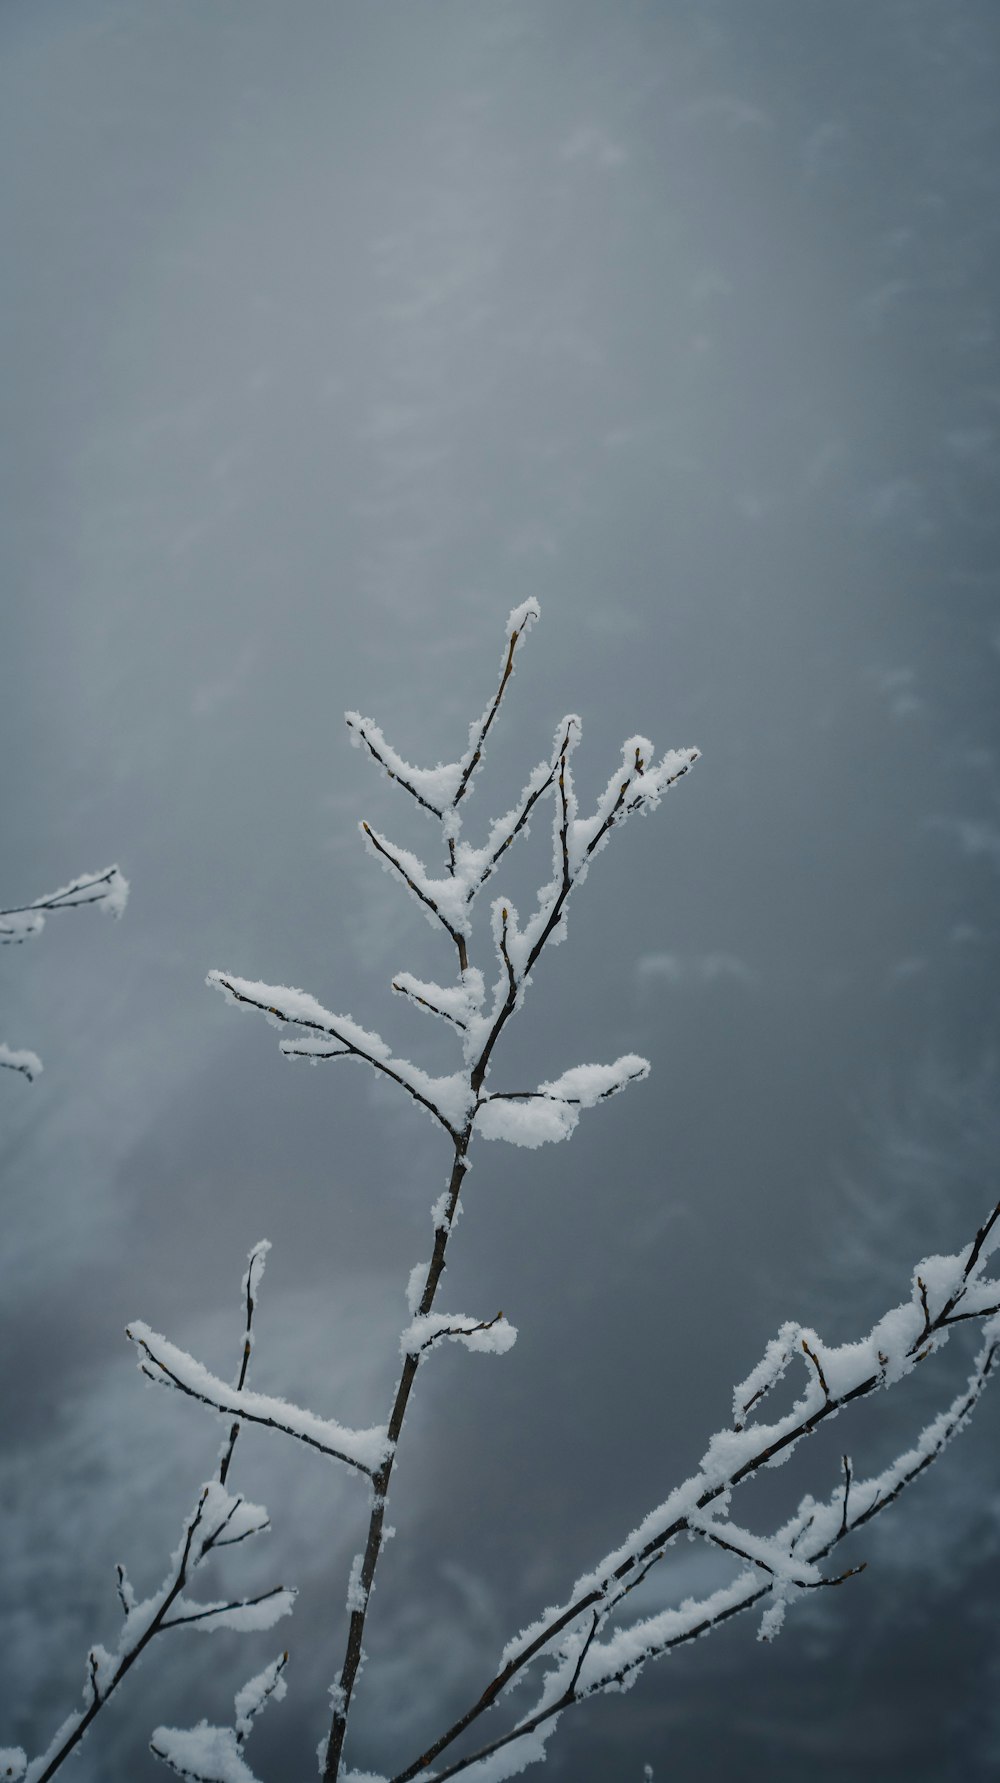 Un ramo d'albero coperto di neve contro un cielo nuvoloso